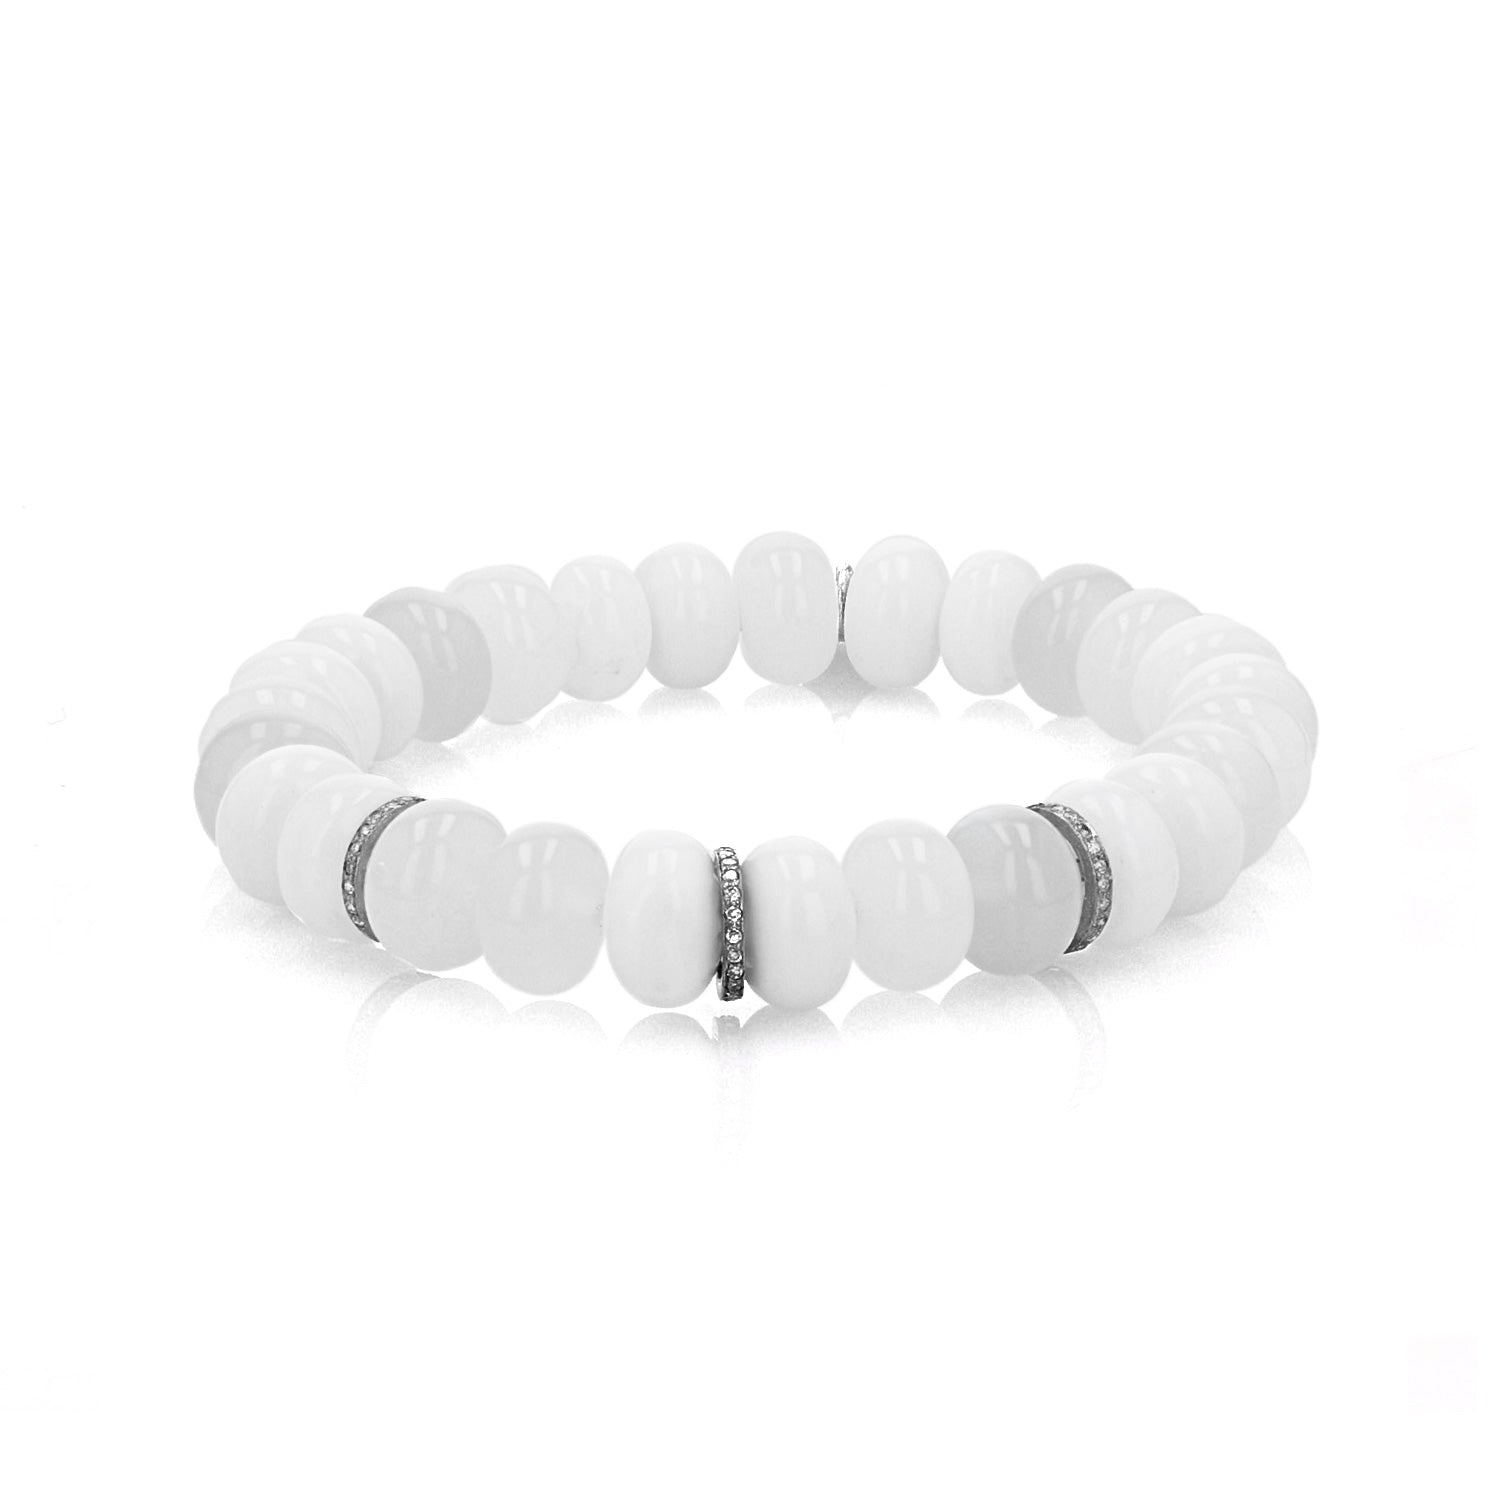 White Gemstone Mix Rondelle Bracelet with 3 Diamond Rondelles - 10mm : B0003680 - TBird